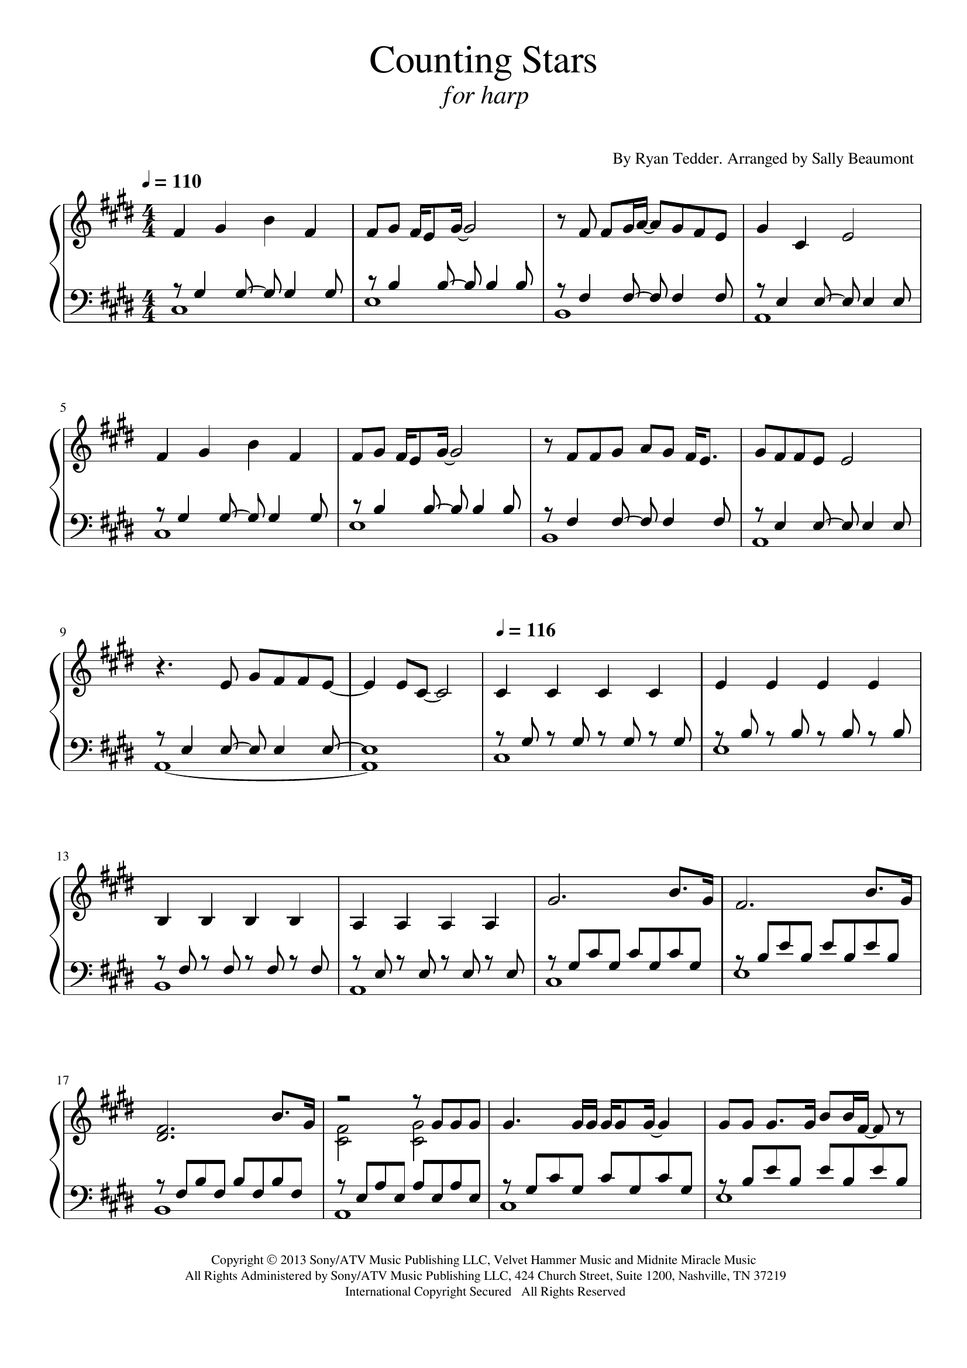 OneRepublic - Counting Stars (intermediate harp) by Sally Beaumont